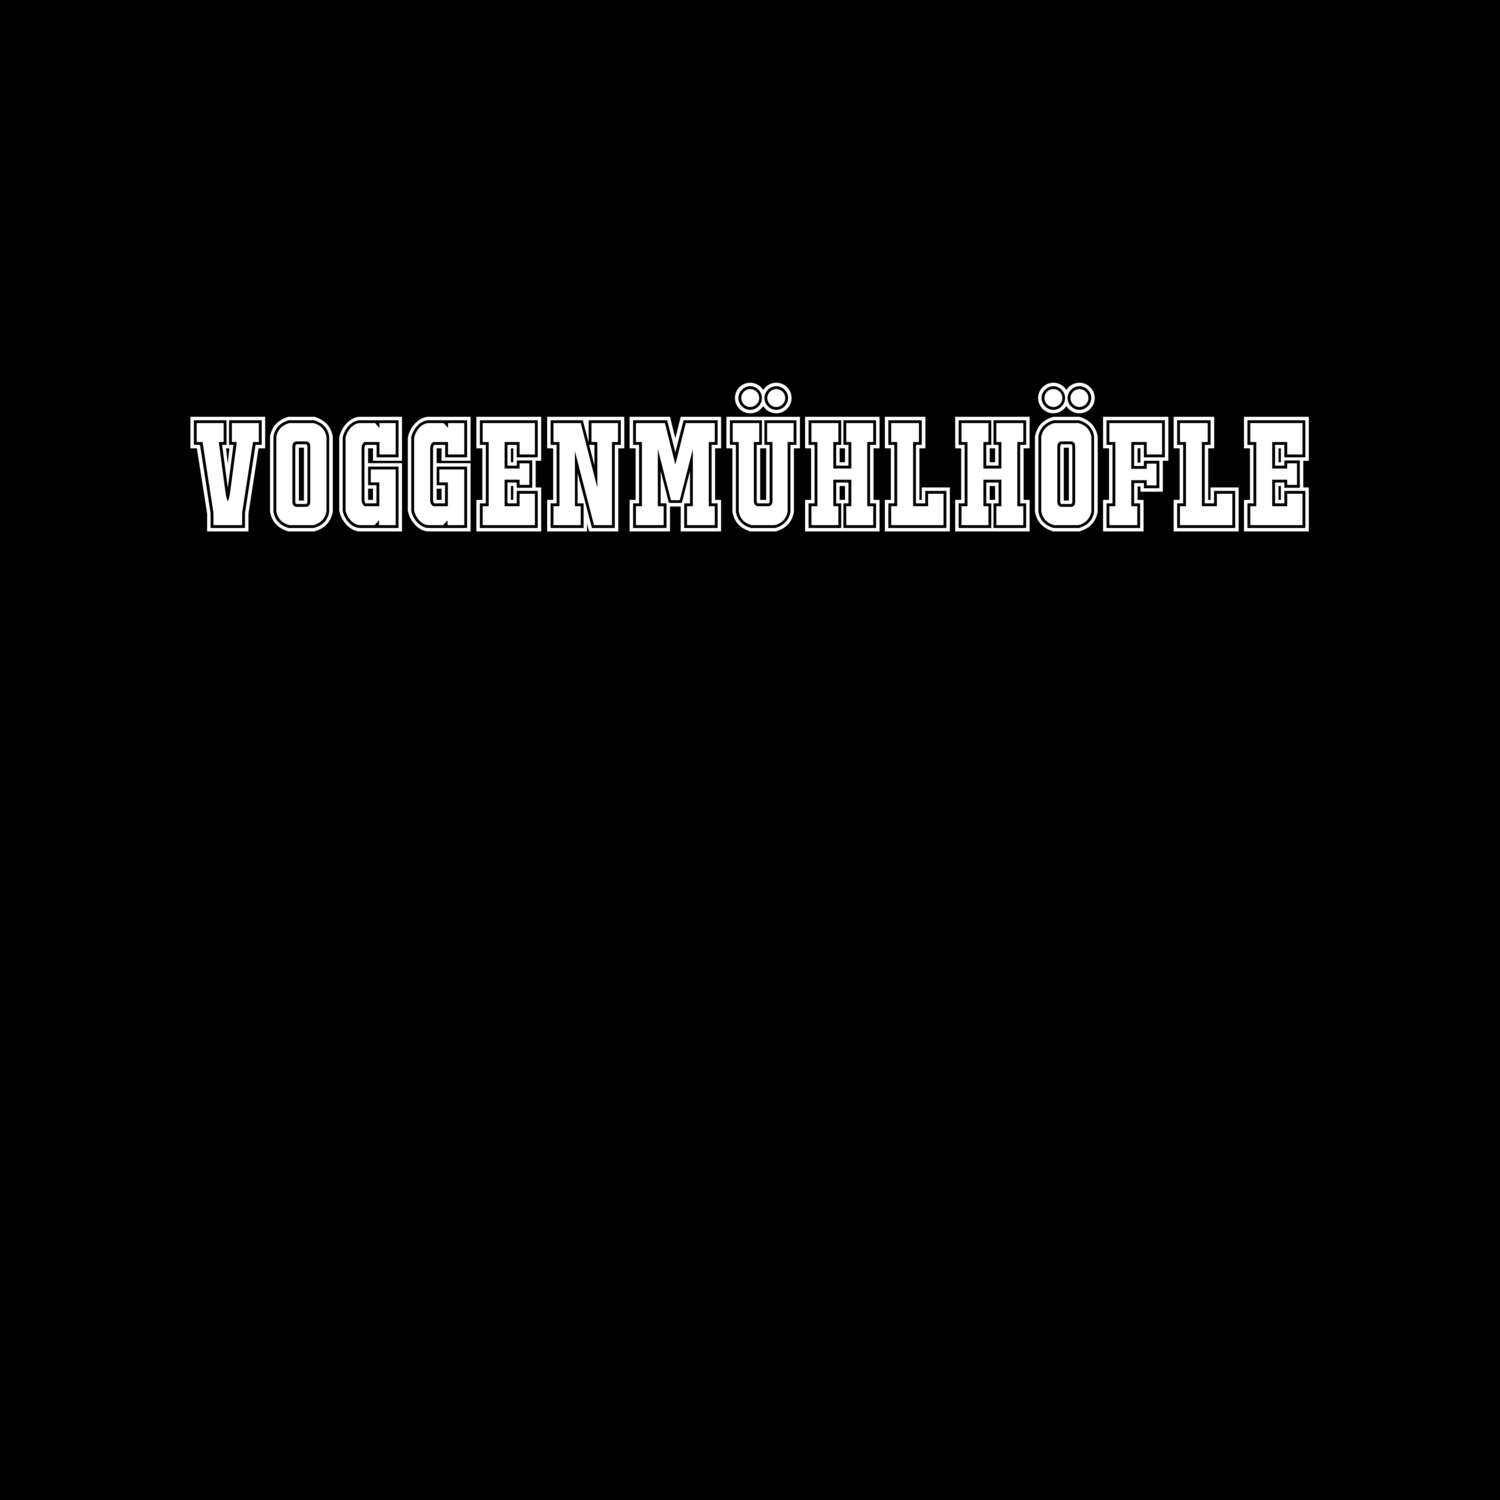 Voggenmühlhöfle T-Shirt »Classic«